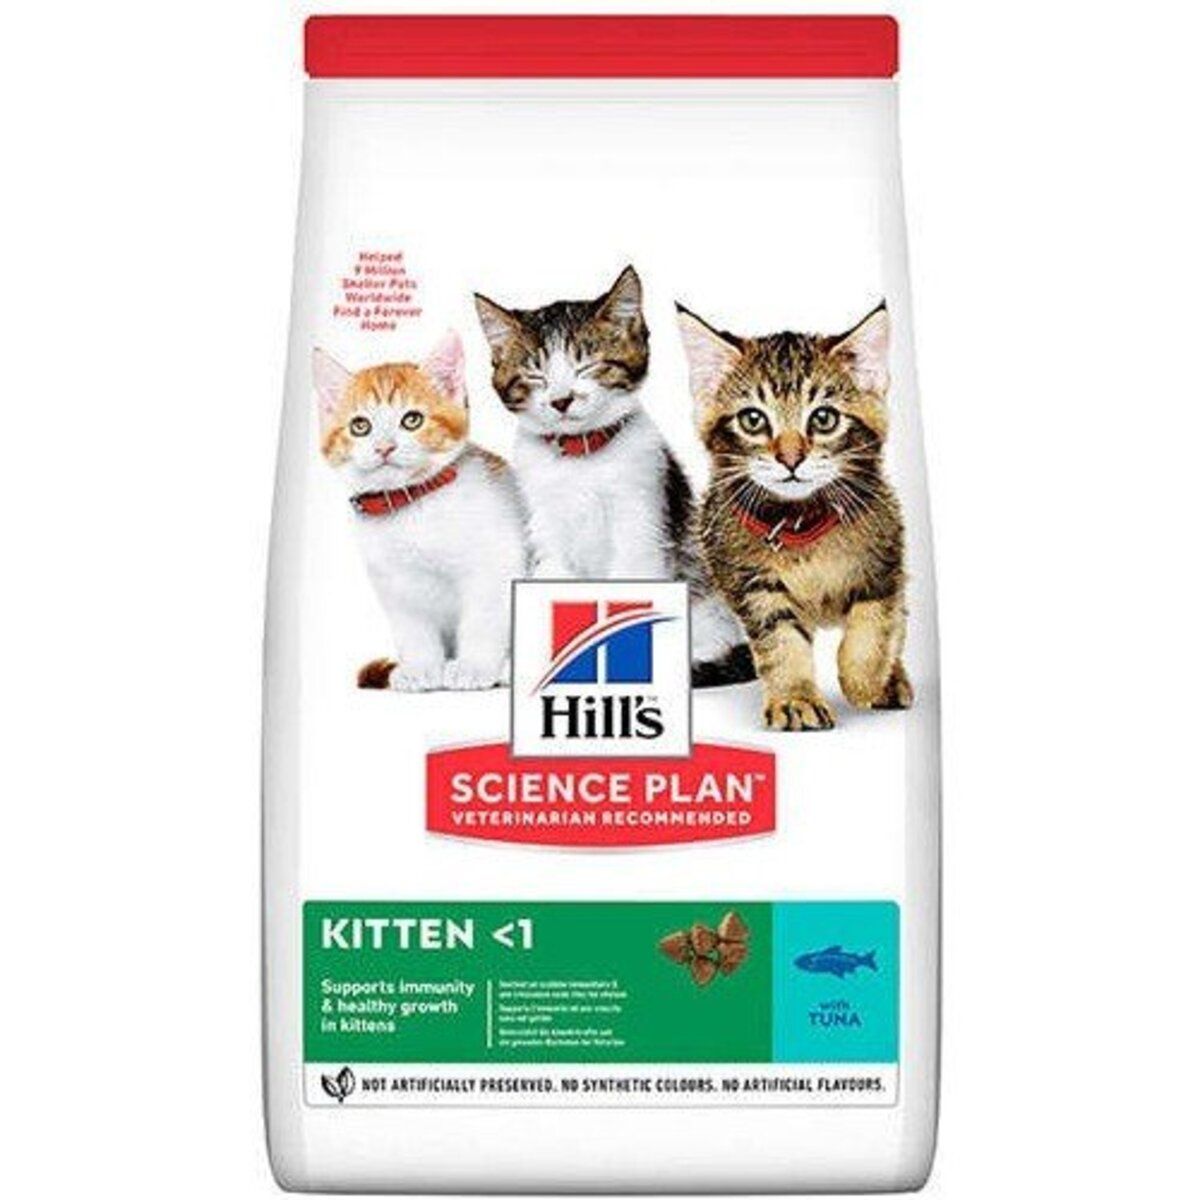 Hill's Kitten Tuna Balıklı Yavru Kuru Kedi Maması 1.5 Kg